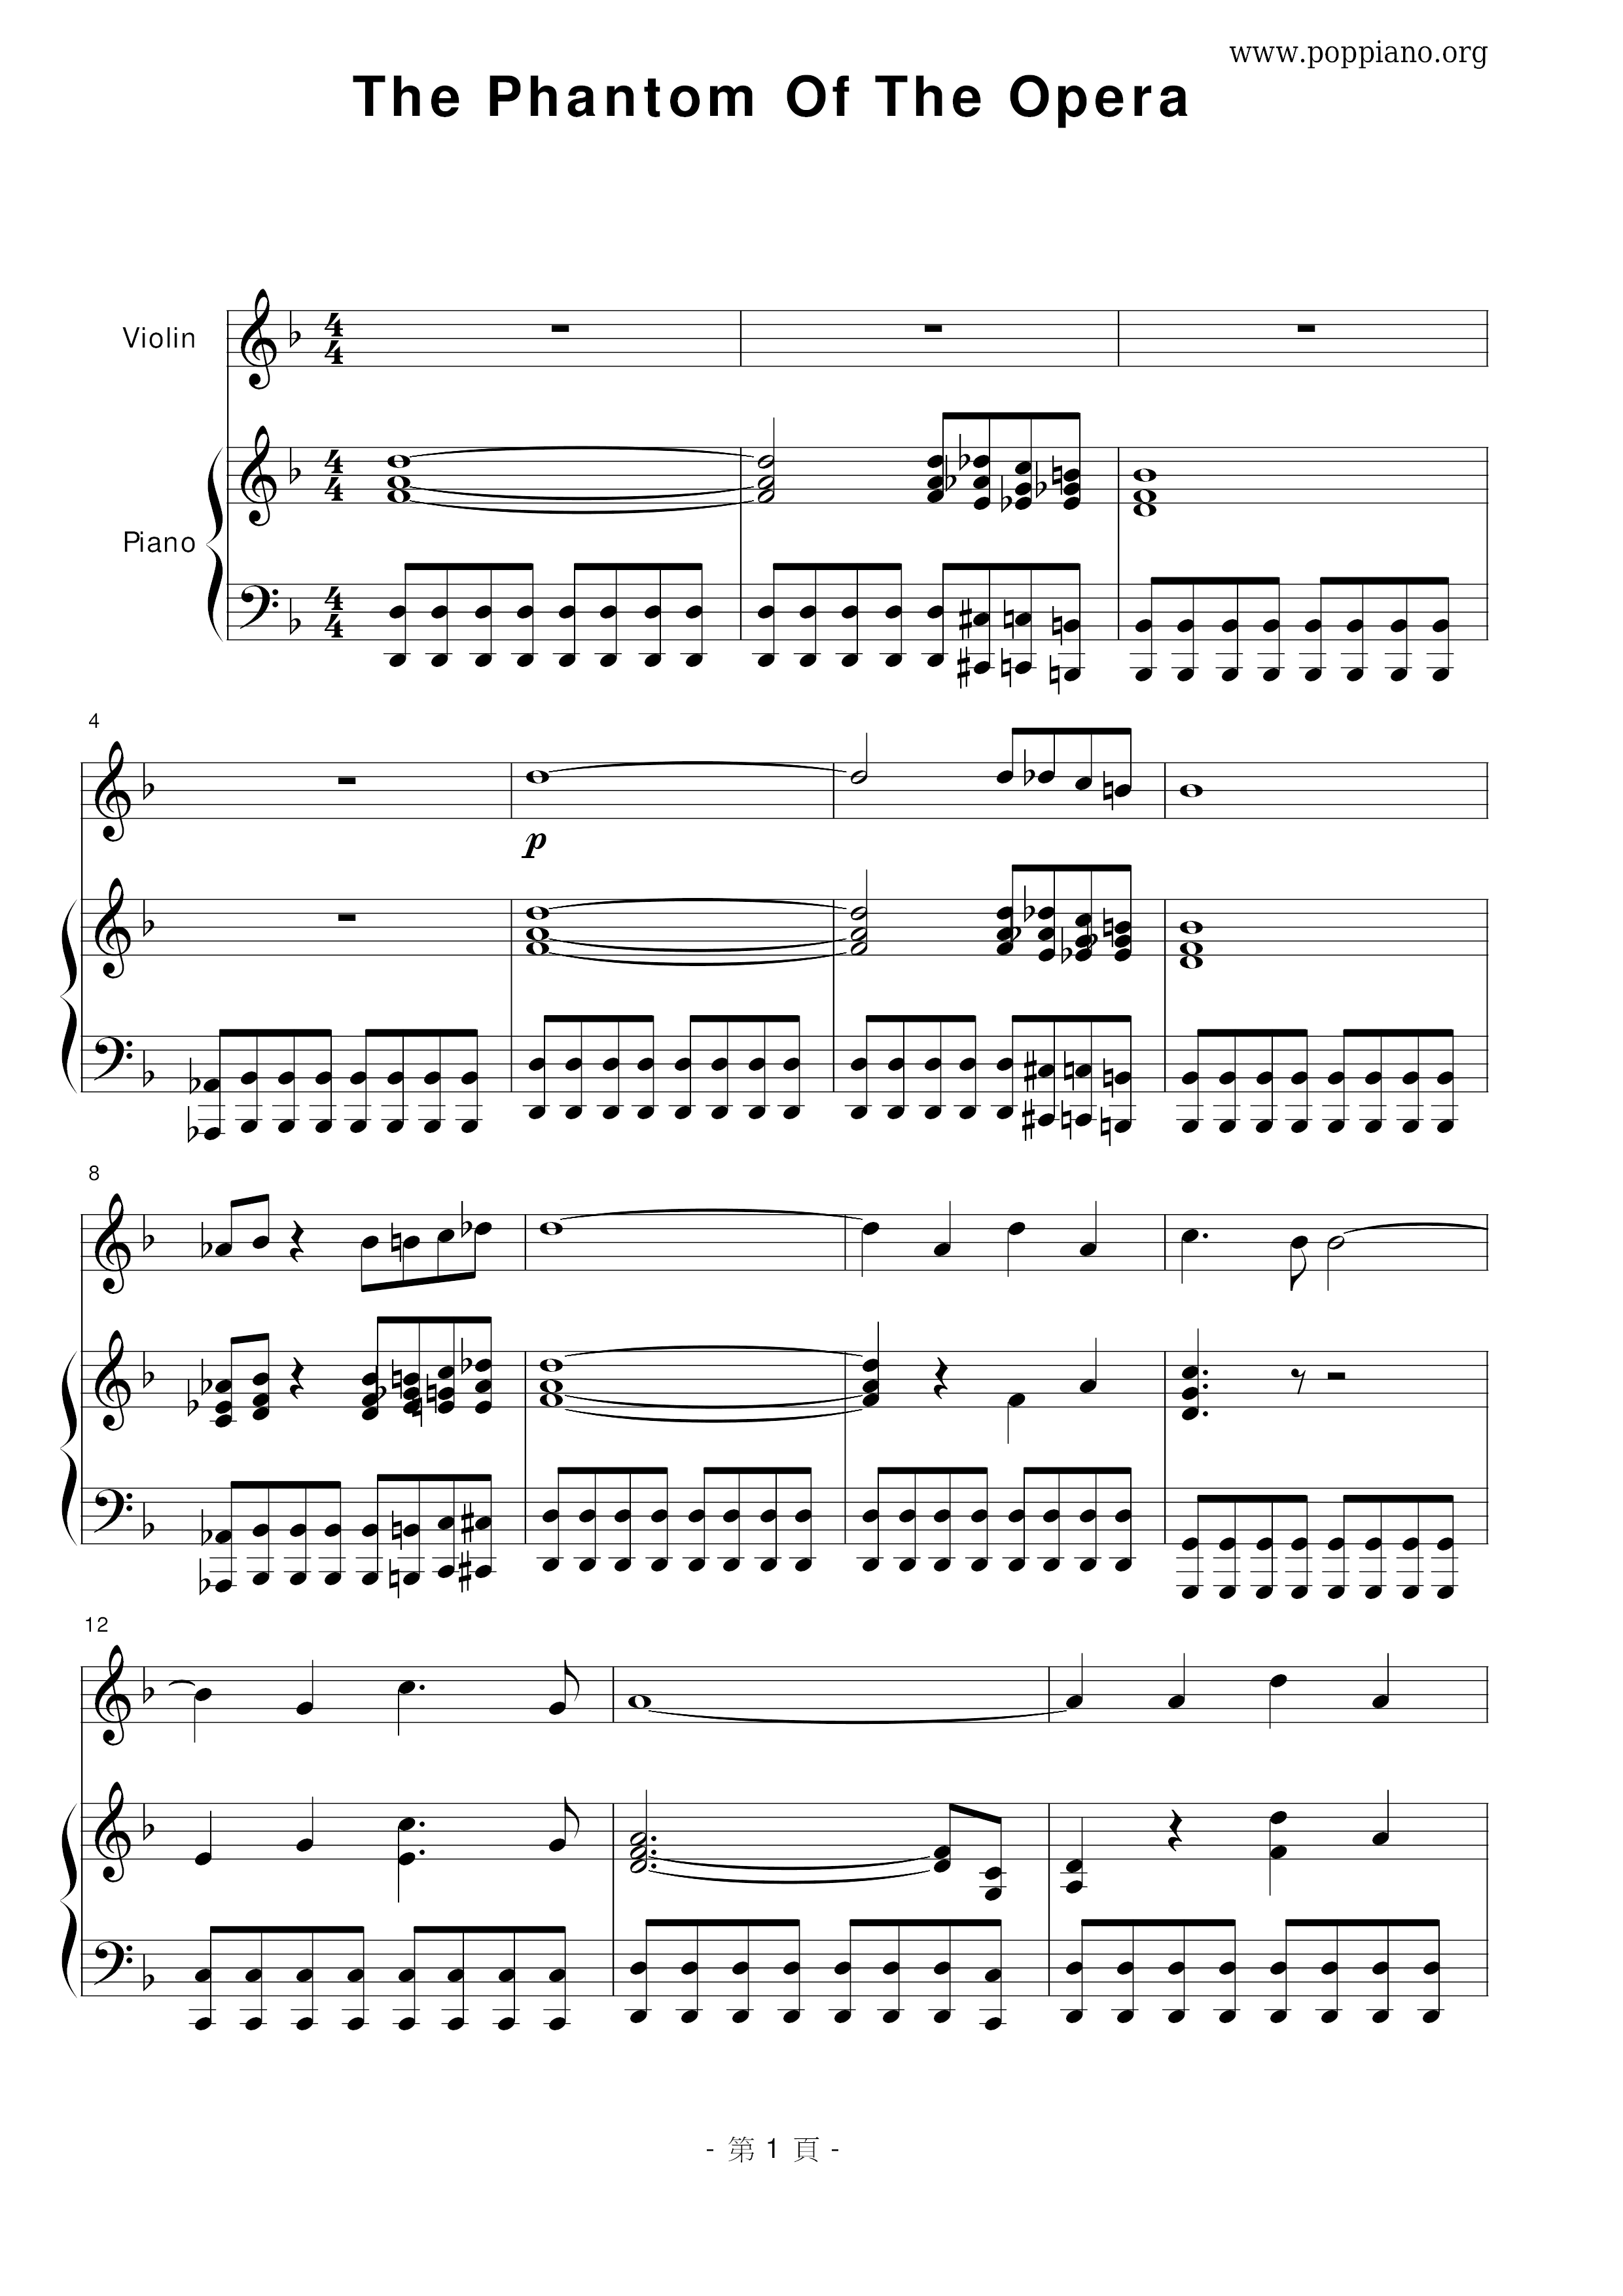 The Phantom of the Opera Score